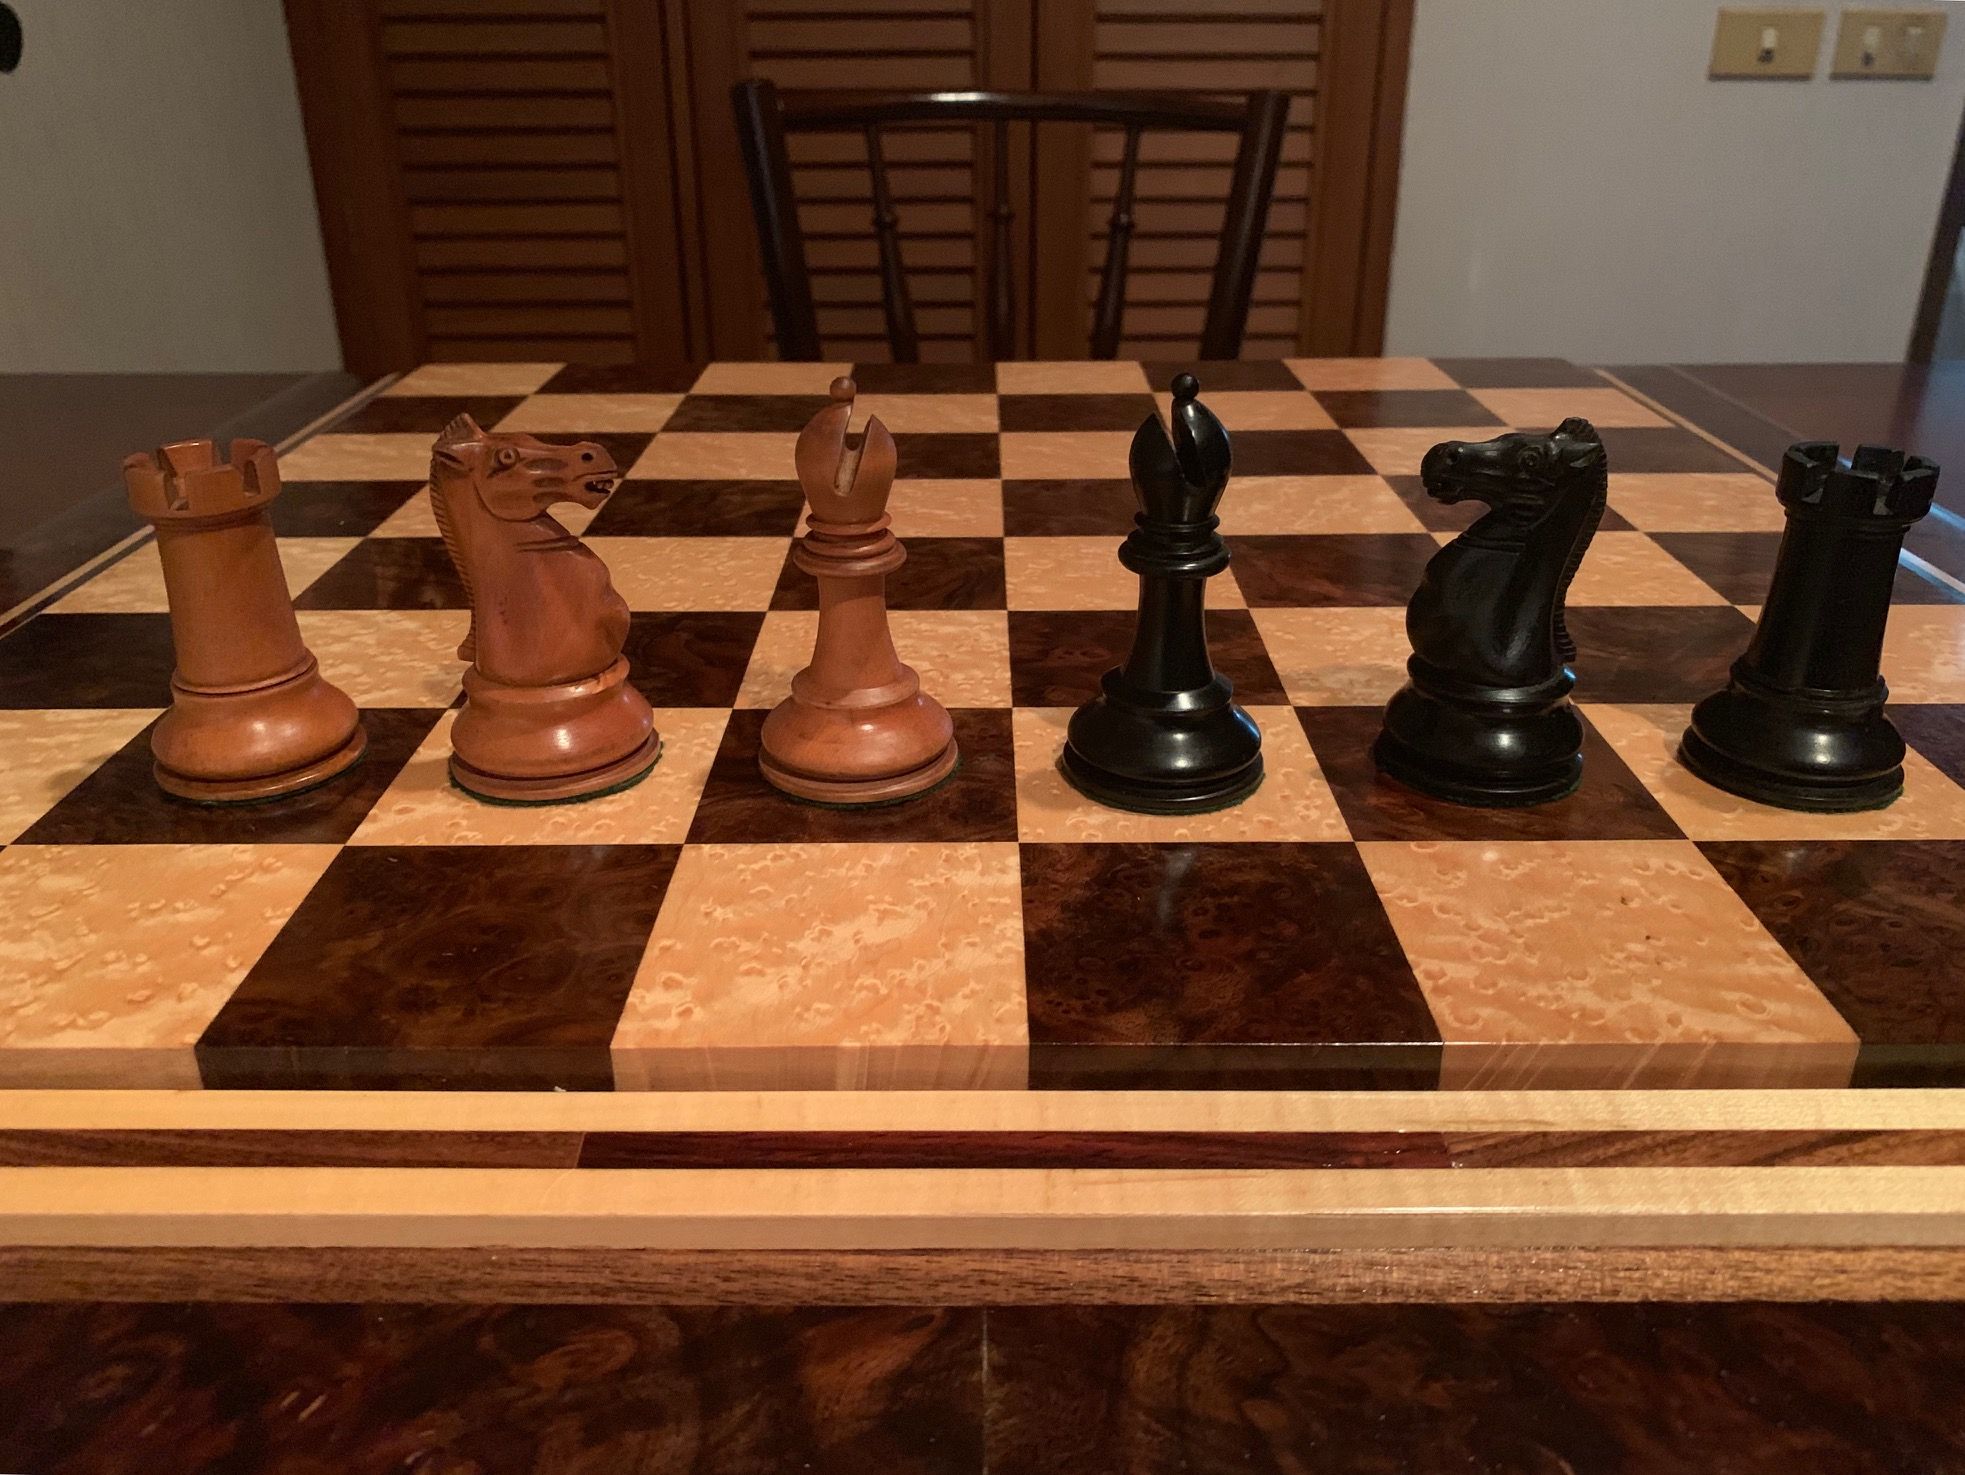 LARGE ORIENTAL THREE KINGDOMS Chess Set WALNUT & BIRDSEYE MAPLE COLOR BOARD 